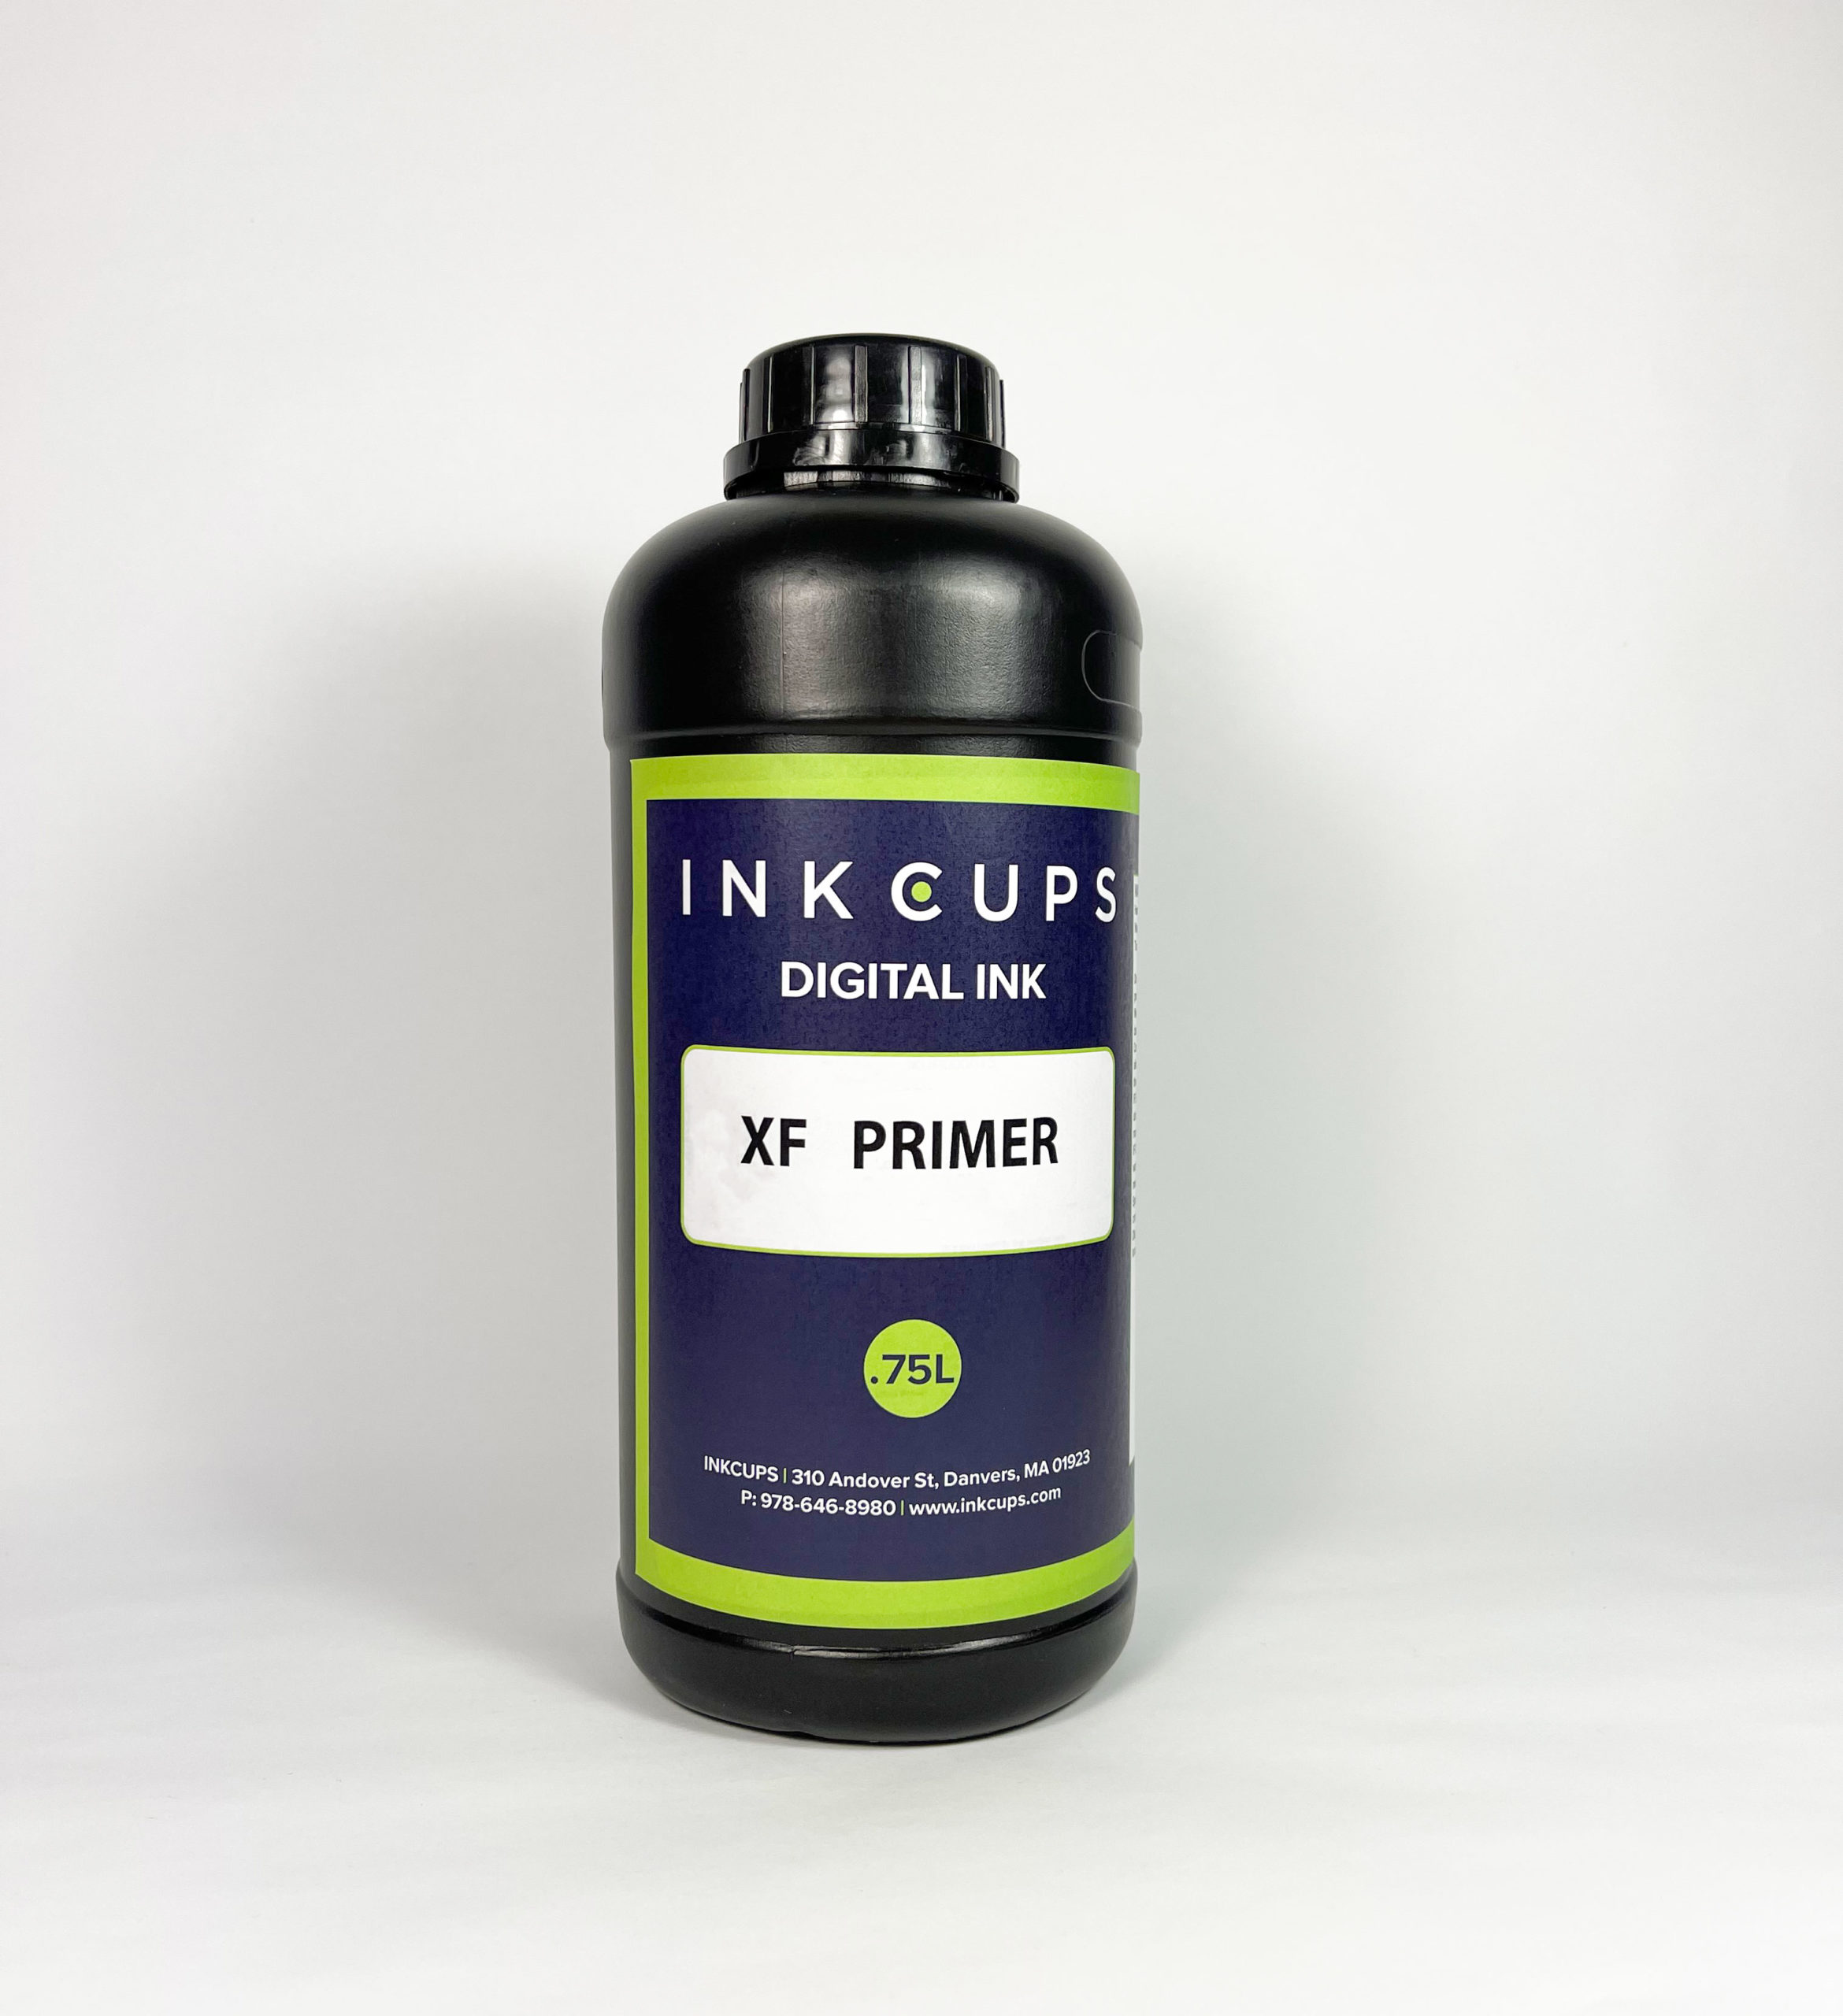 XF Primer joins the Inkcups Digital Primer Offerings - Inkcups